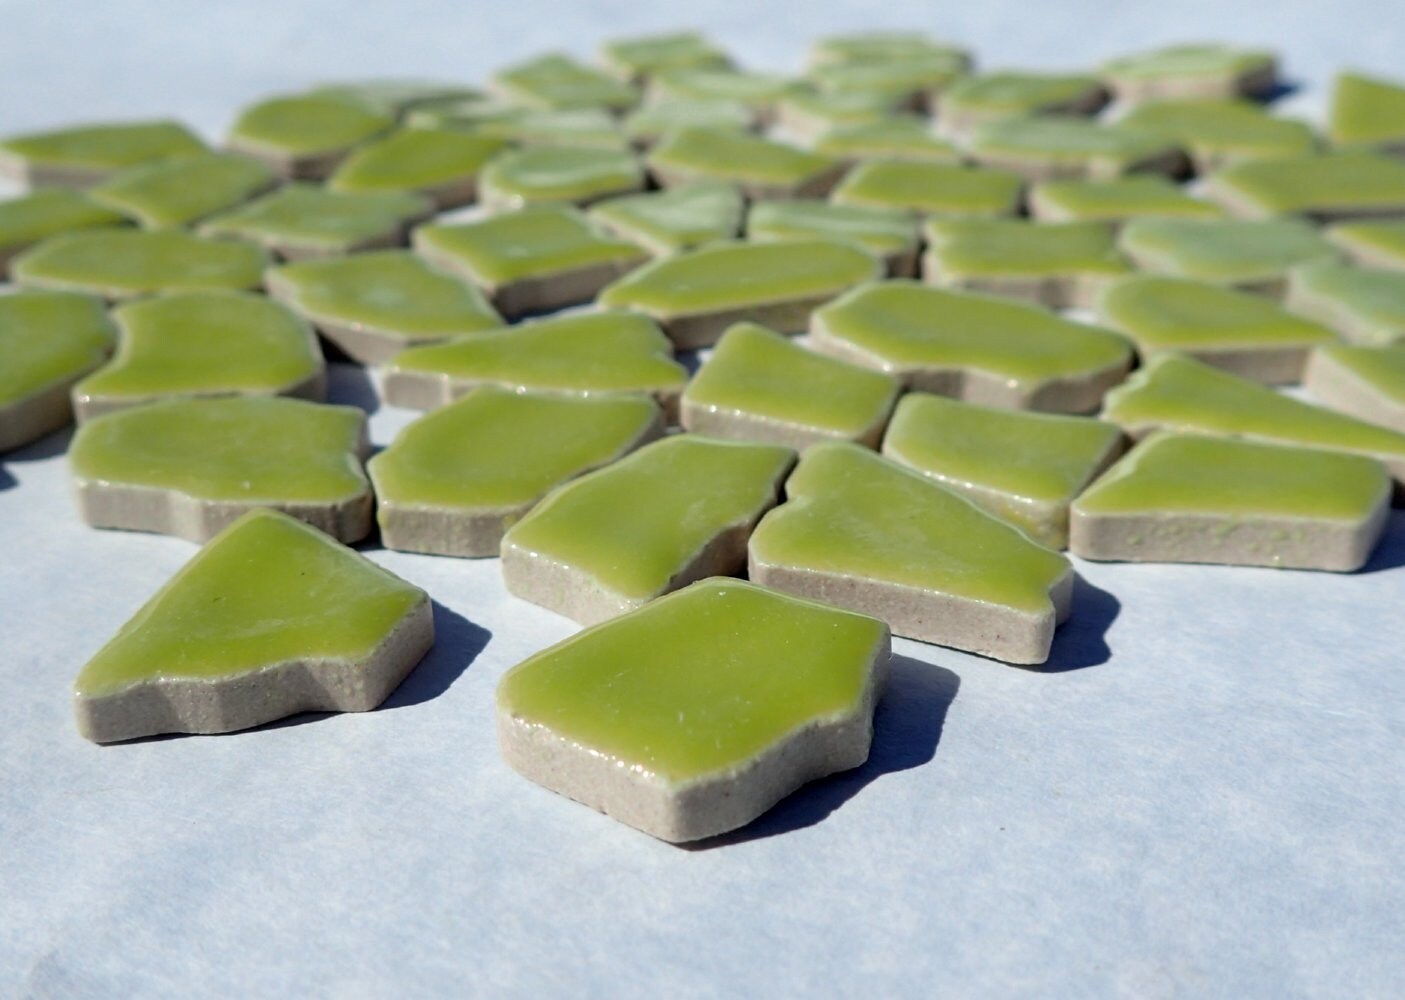 Kiwi Green Mosaic Ceramic Tiles - Jigsaw Puzzle Shaped Pieces - Half Pound - Assorted Sizes Random Shapes